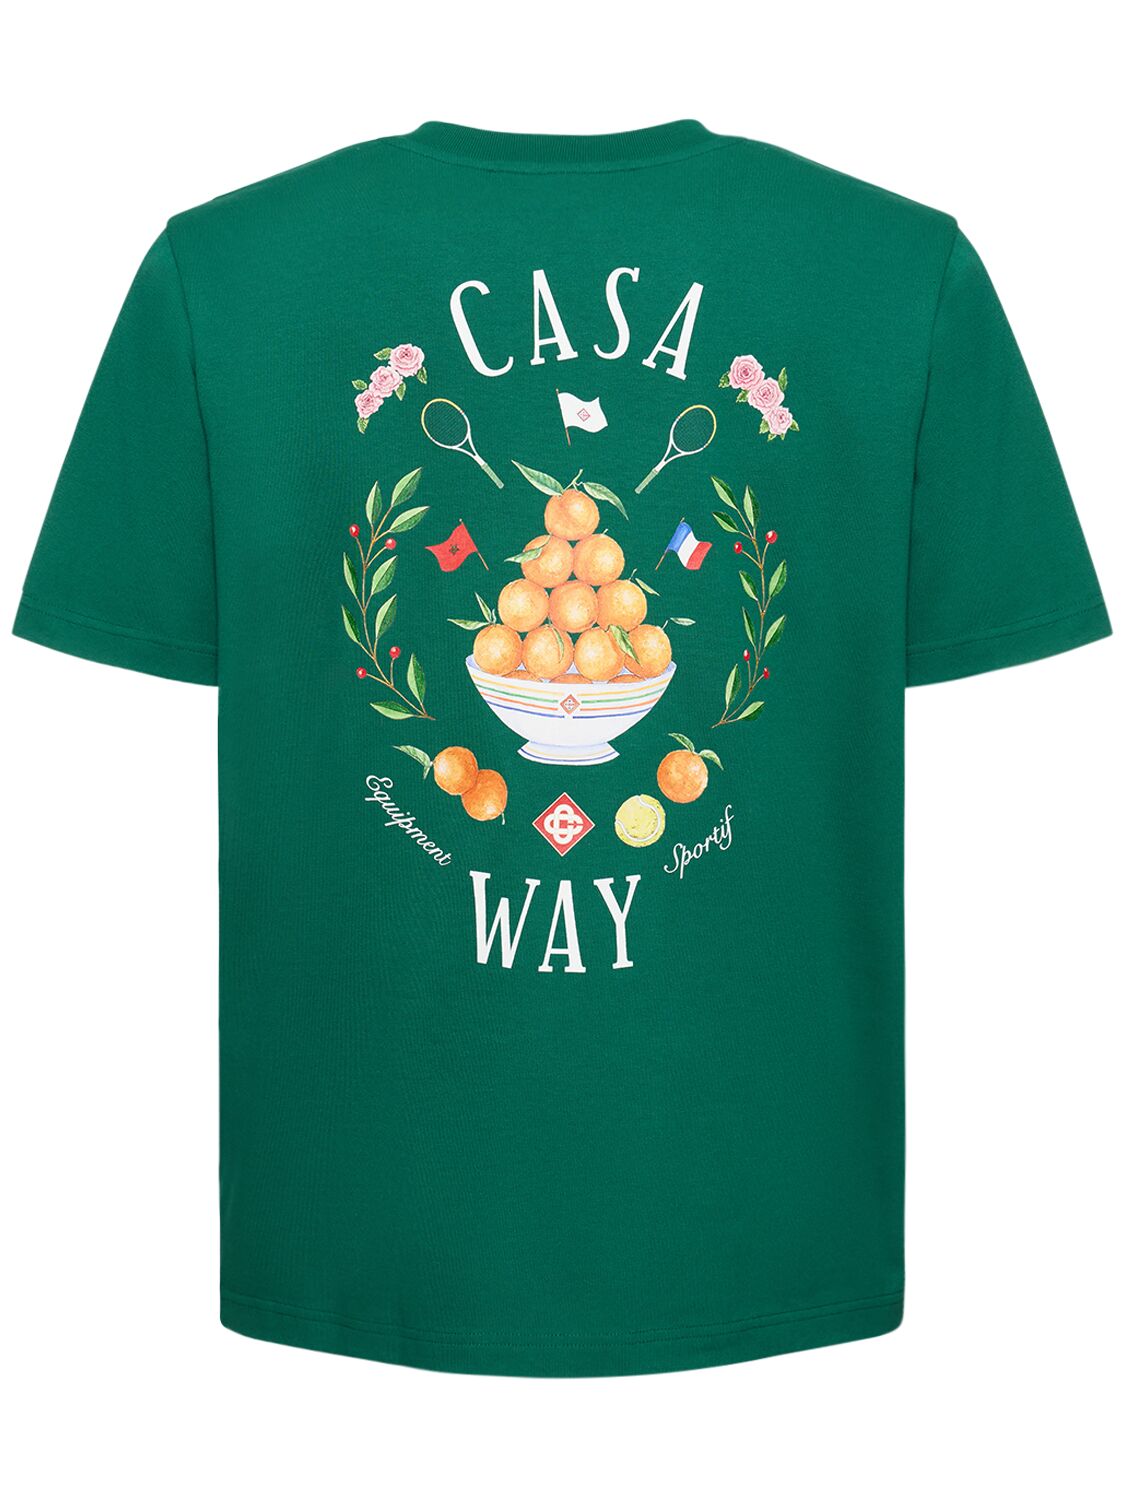 Casa Way Organic Cotton T-shirt